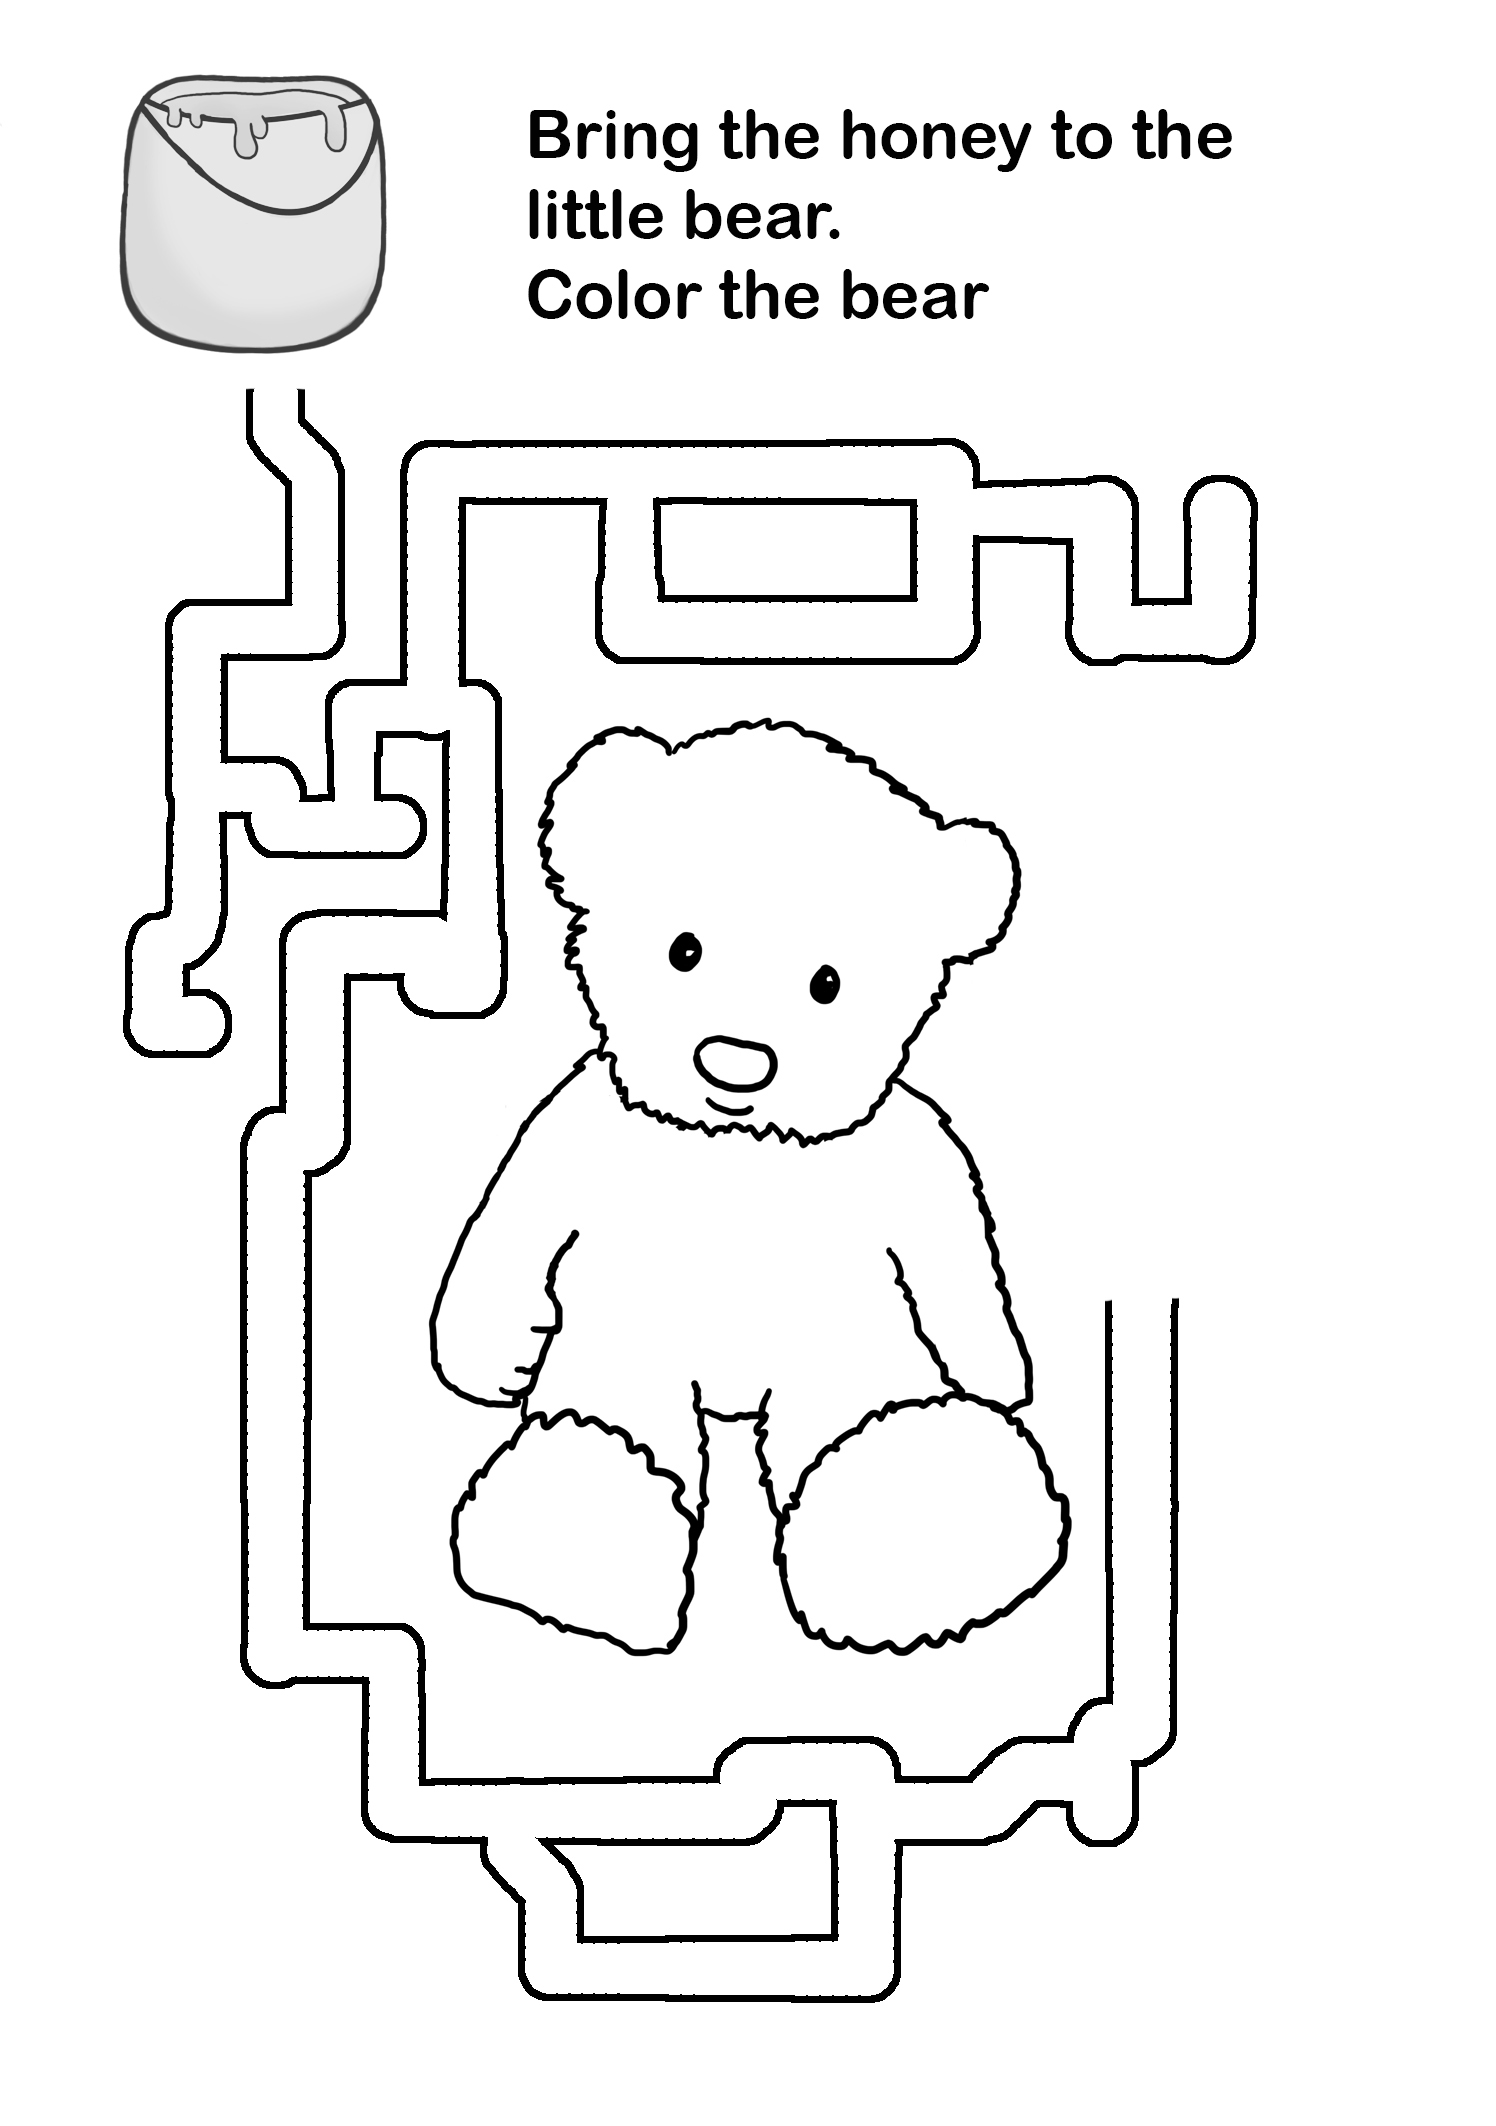 Honey to the bear maze for kindergarten